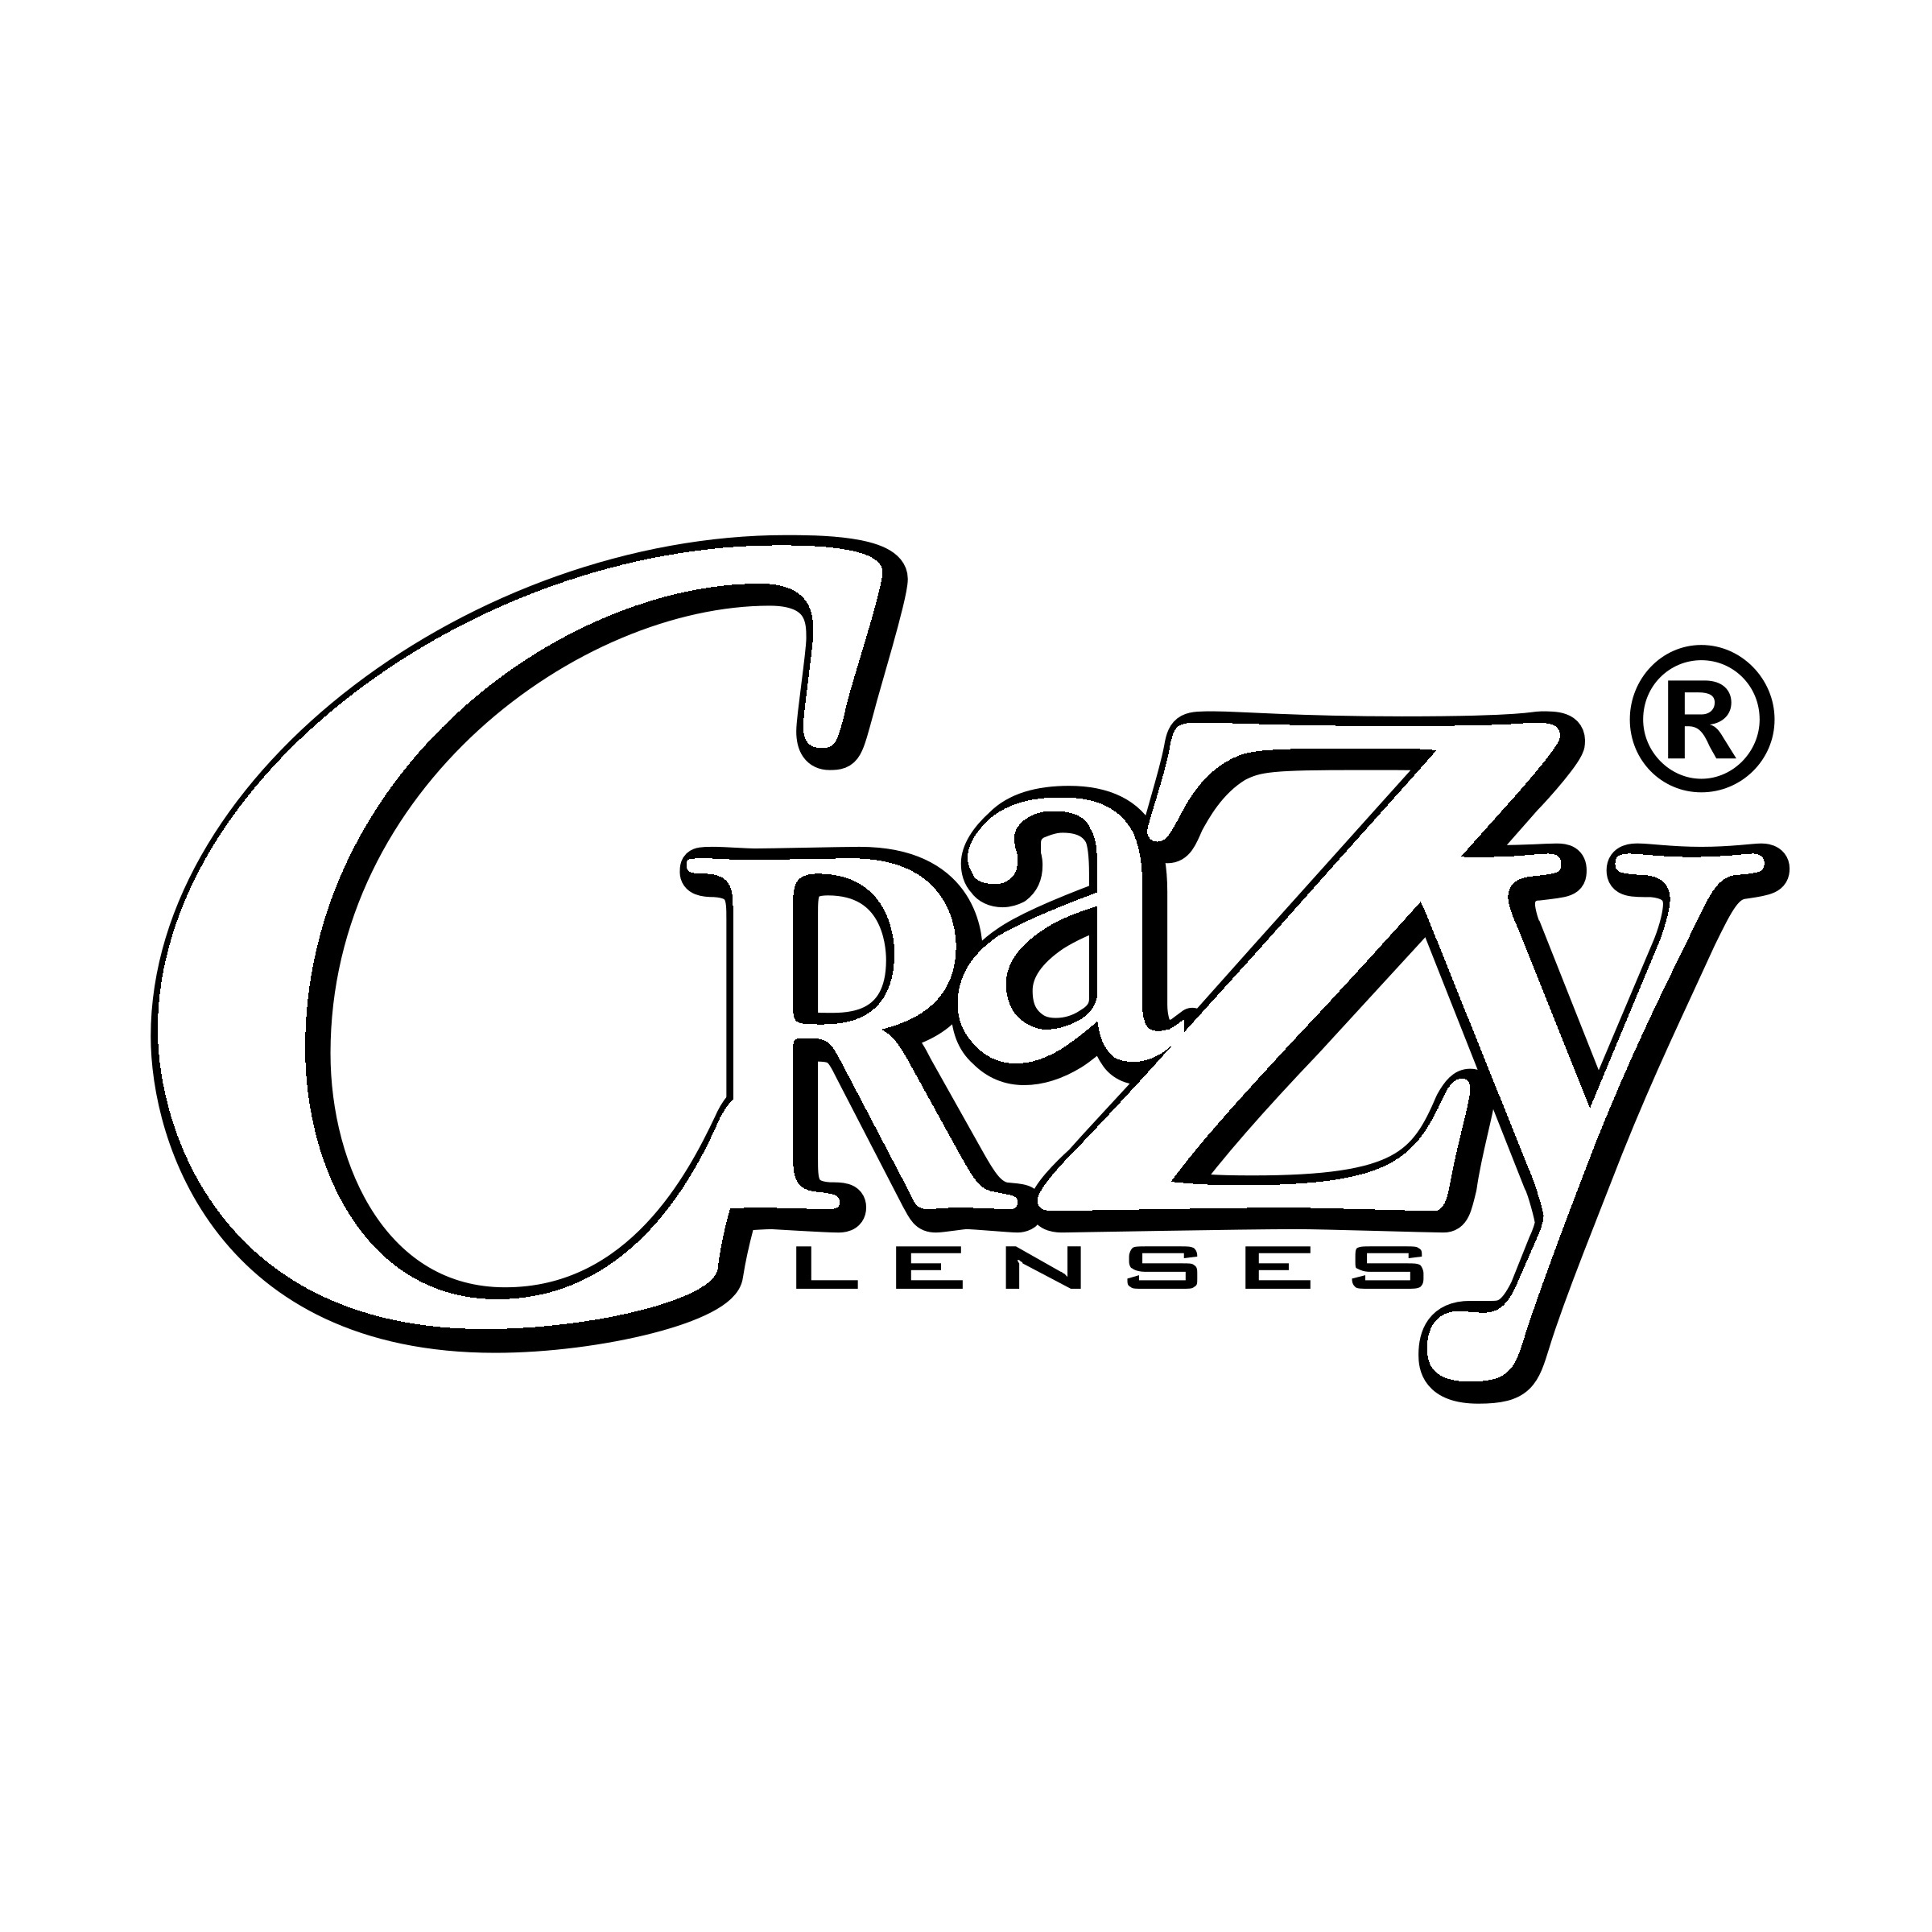 crazy-lenses-logo-black-and-white.png